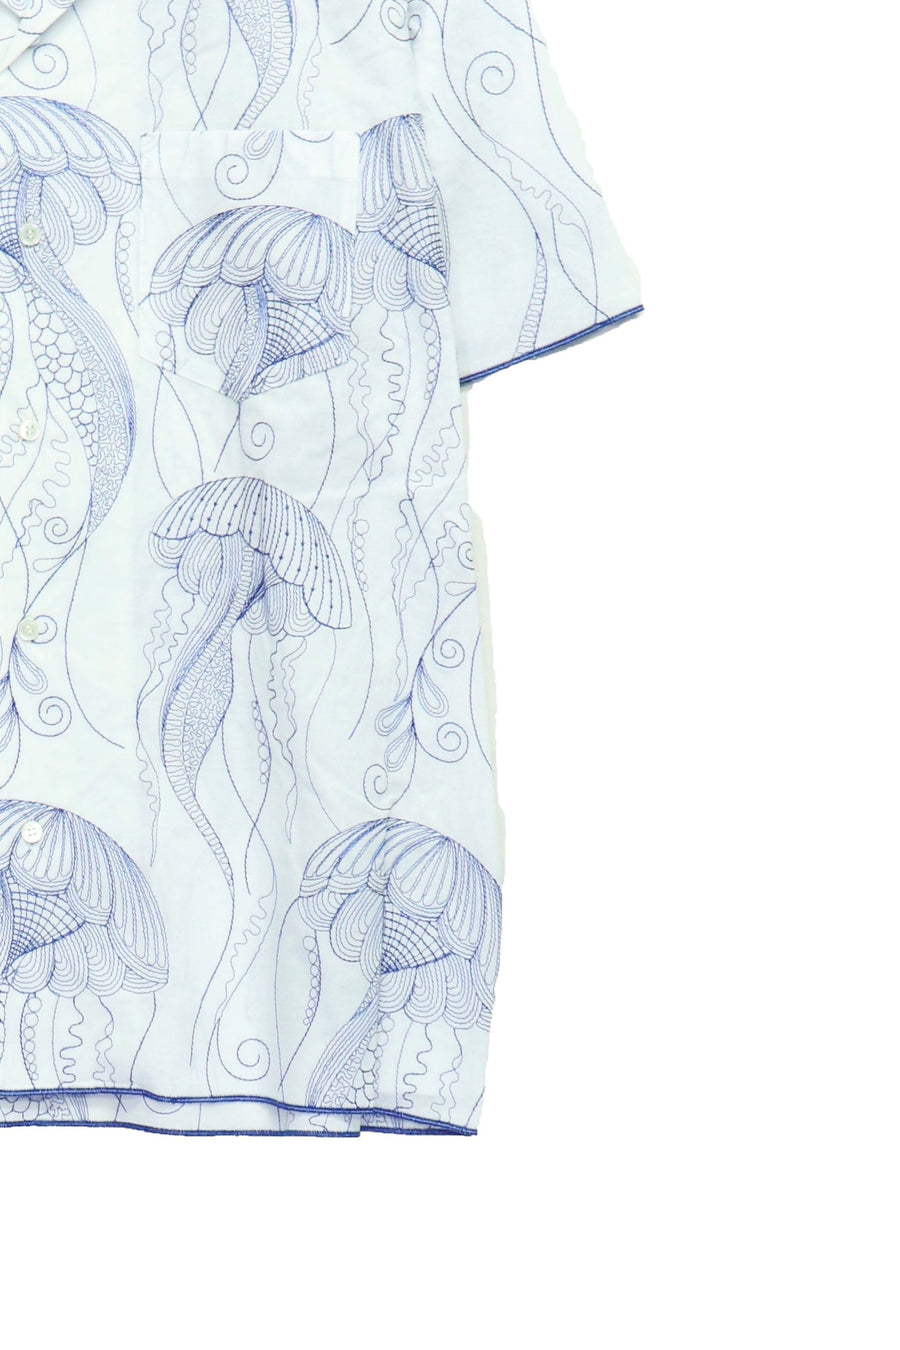 TOGA VIRILIS  Cotton Embroidery S/S shirt(WHITE)